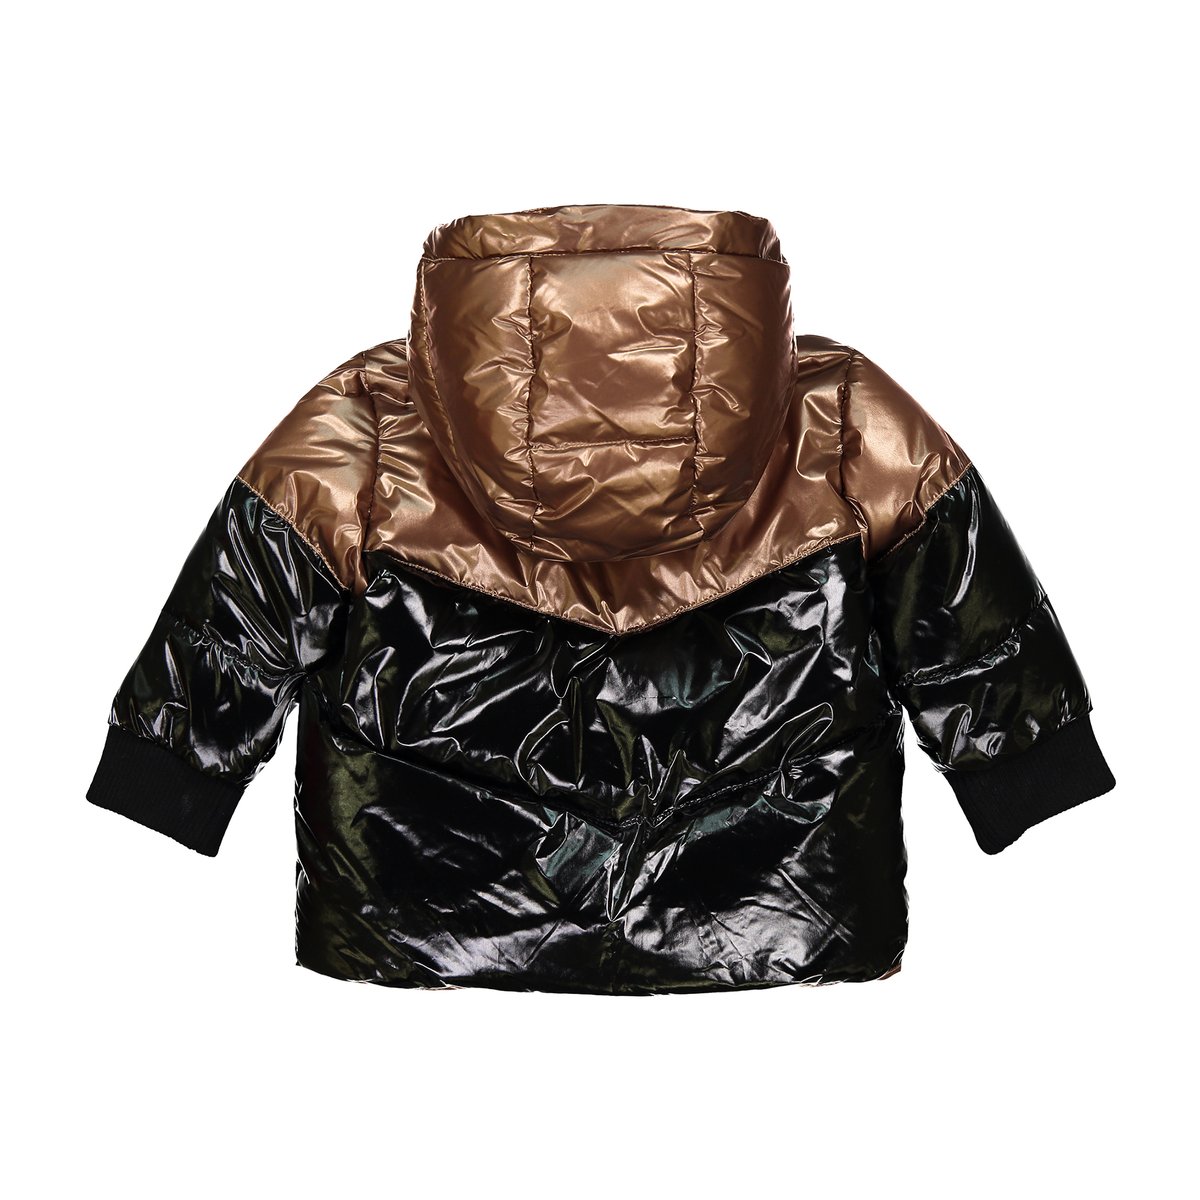 Куртка La Redoute С капюшоном с металлическим отливом  мес -  лет 3 мес. - 60 см каштановый, размер 3 мес. - 60 см - фото 2